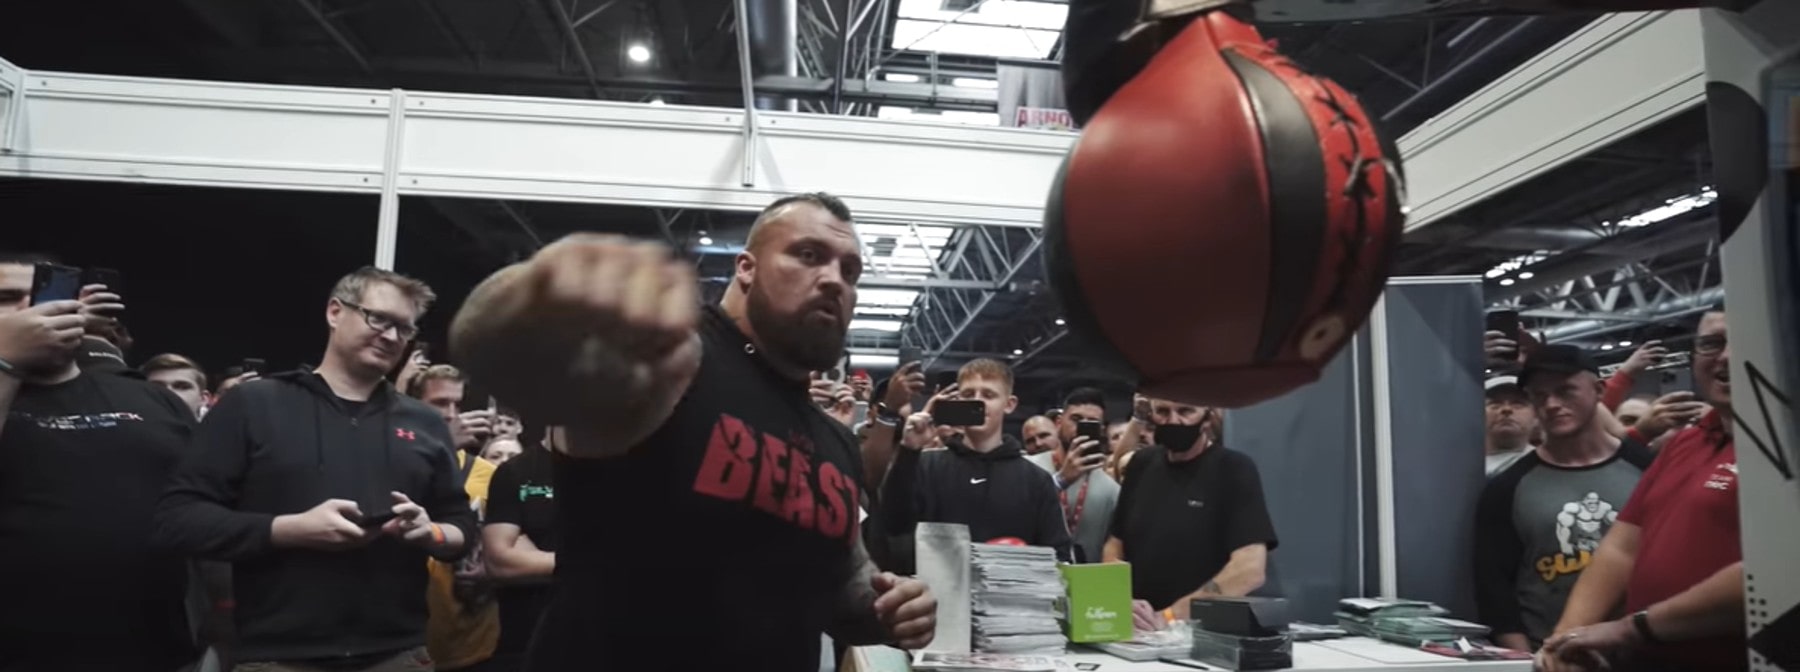 Eddie Hall Destroys Punch Bag Machine With Huge Right Hand